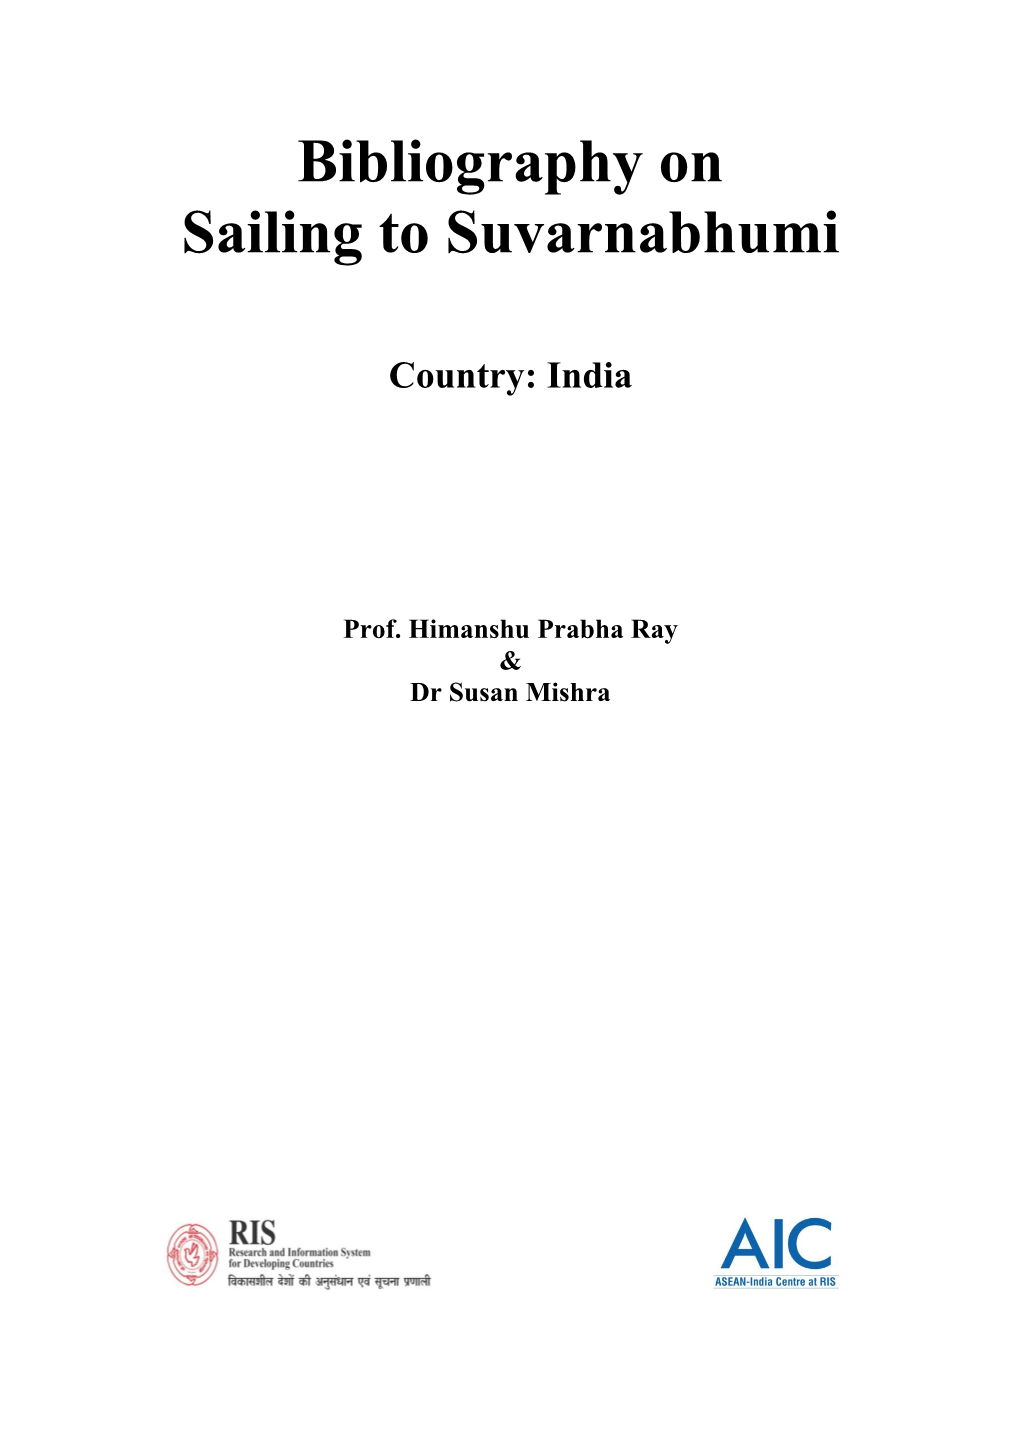 Bibliography on Sailing to Suvarnabhumi Country: India